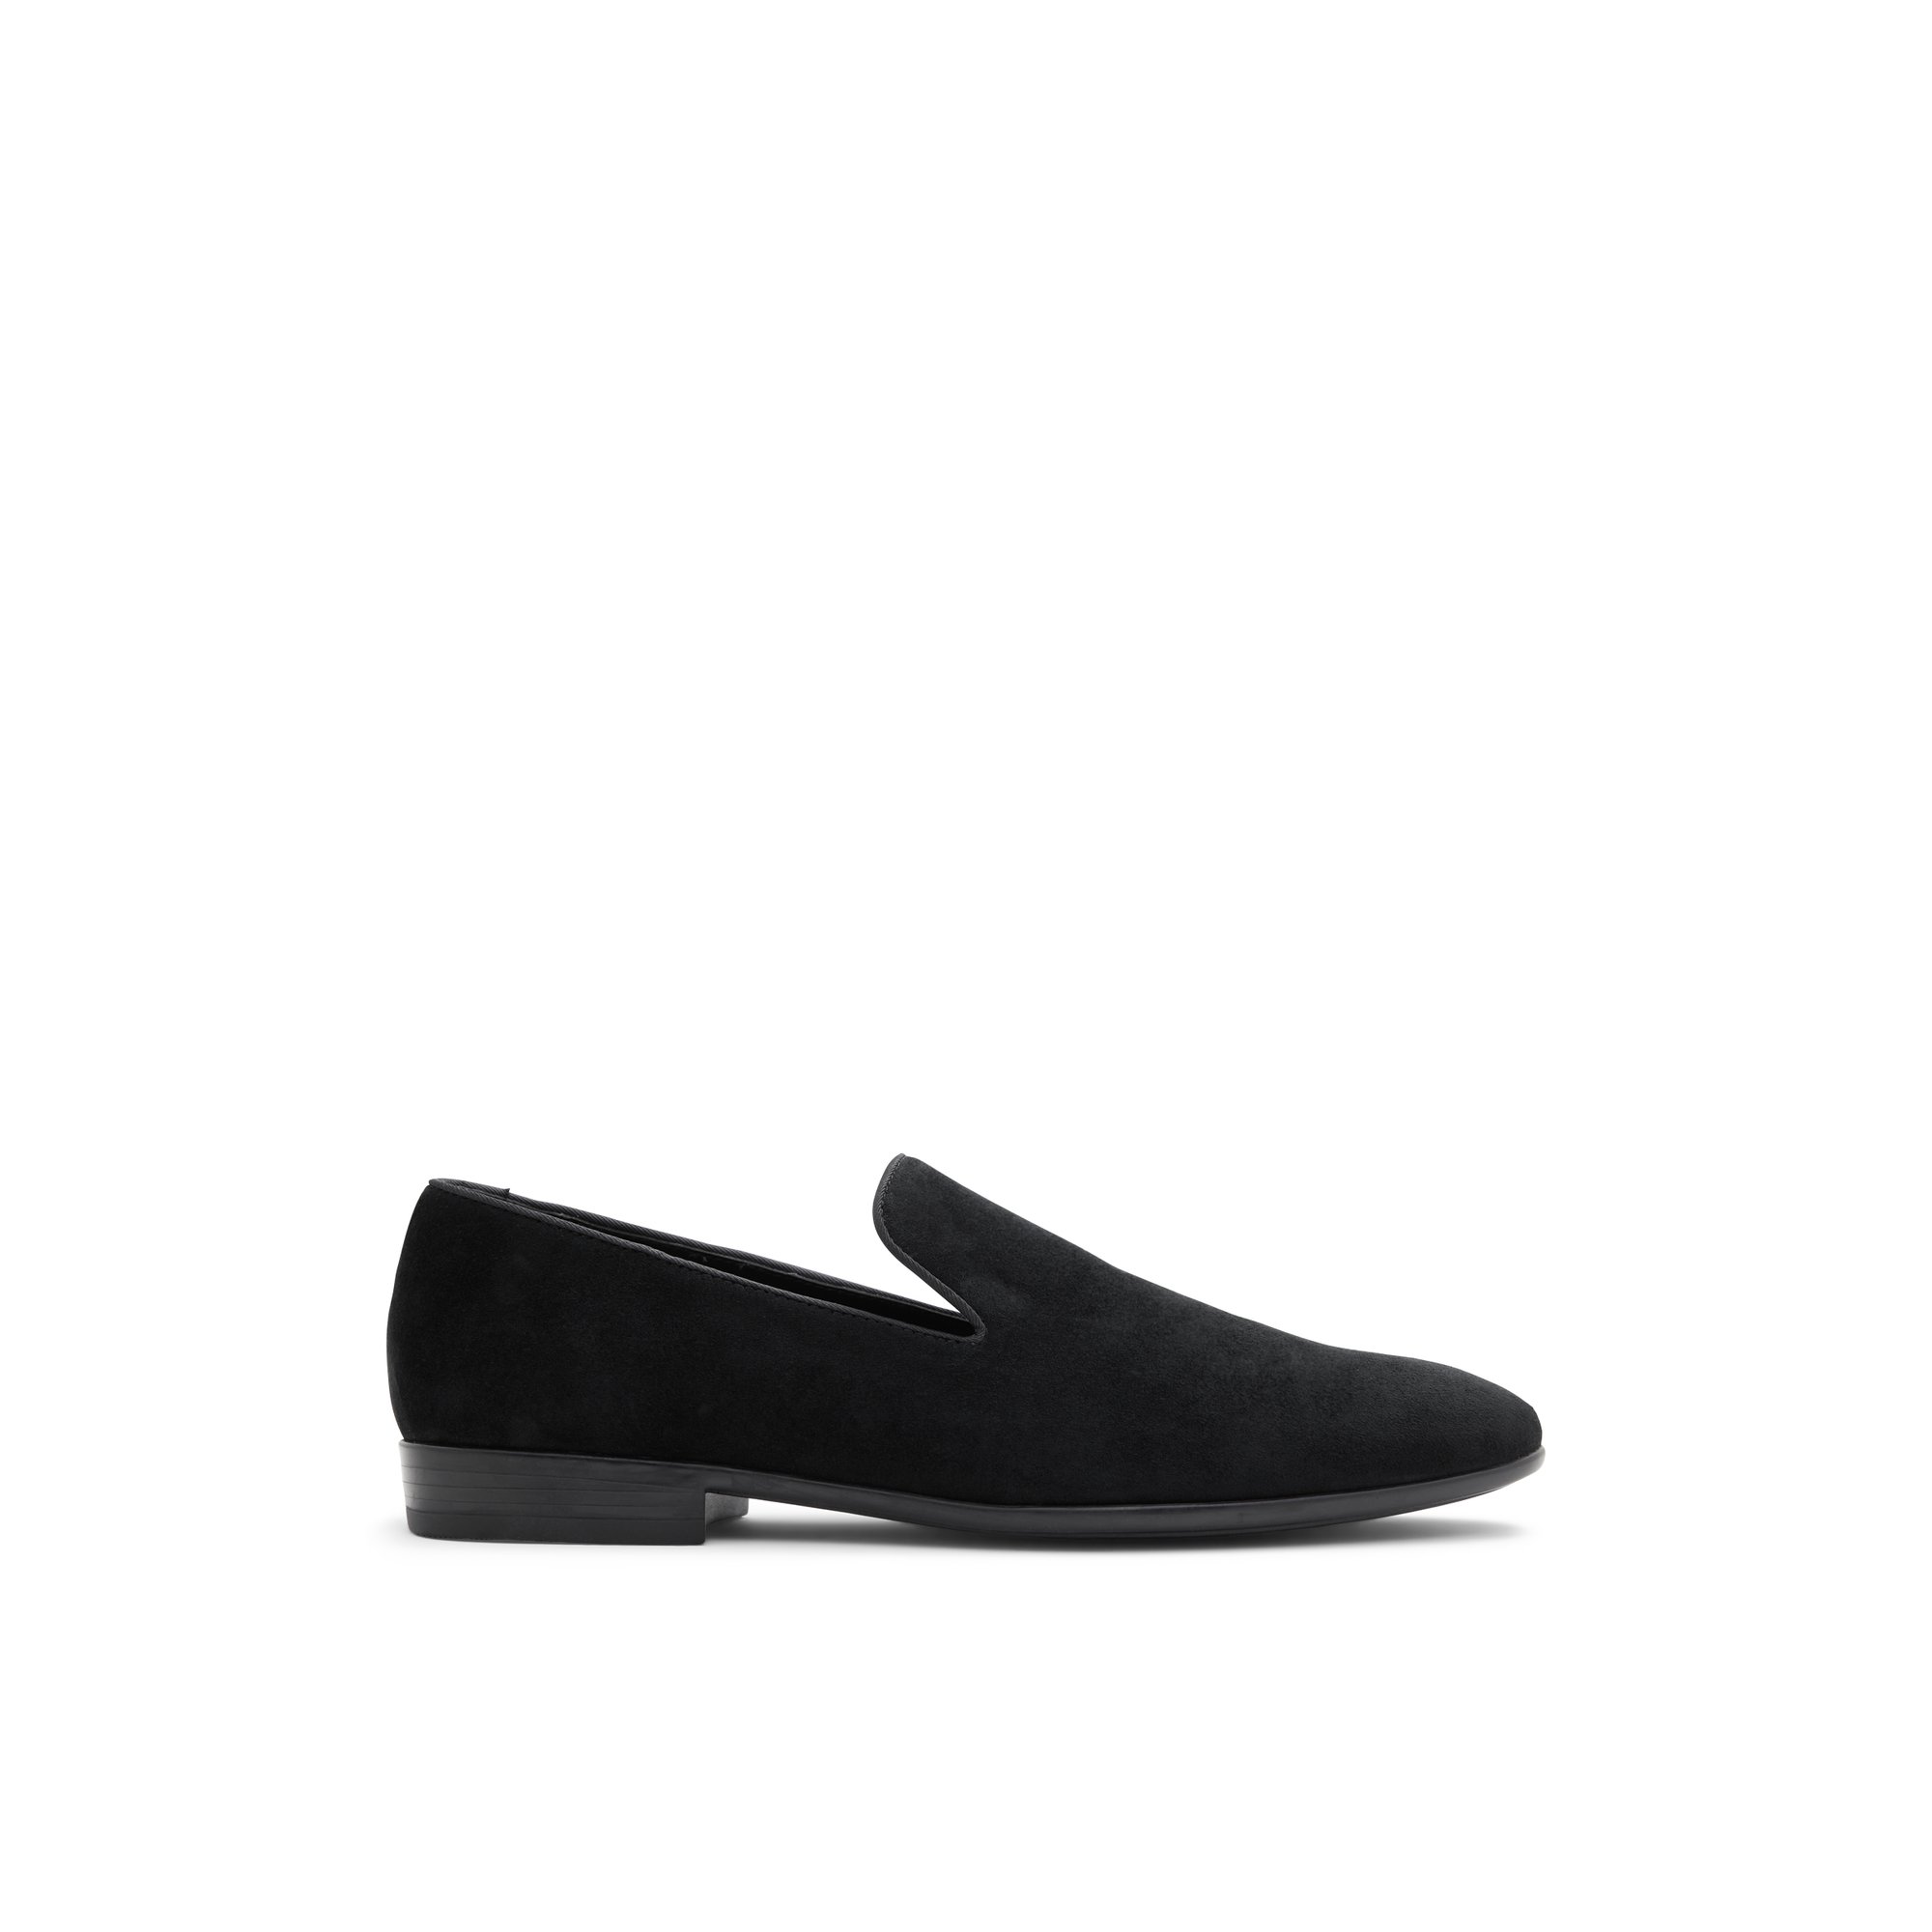 Image of ALDO Beau - Men's Dress Shoe - Black, Size 13